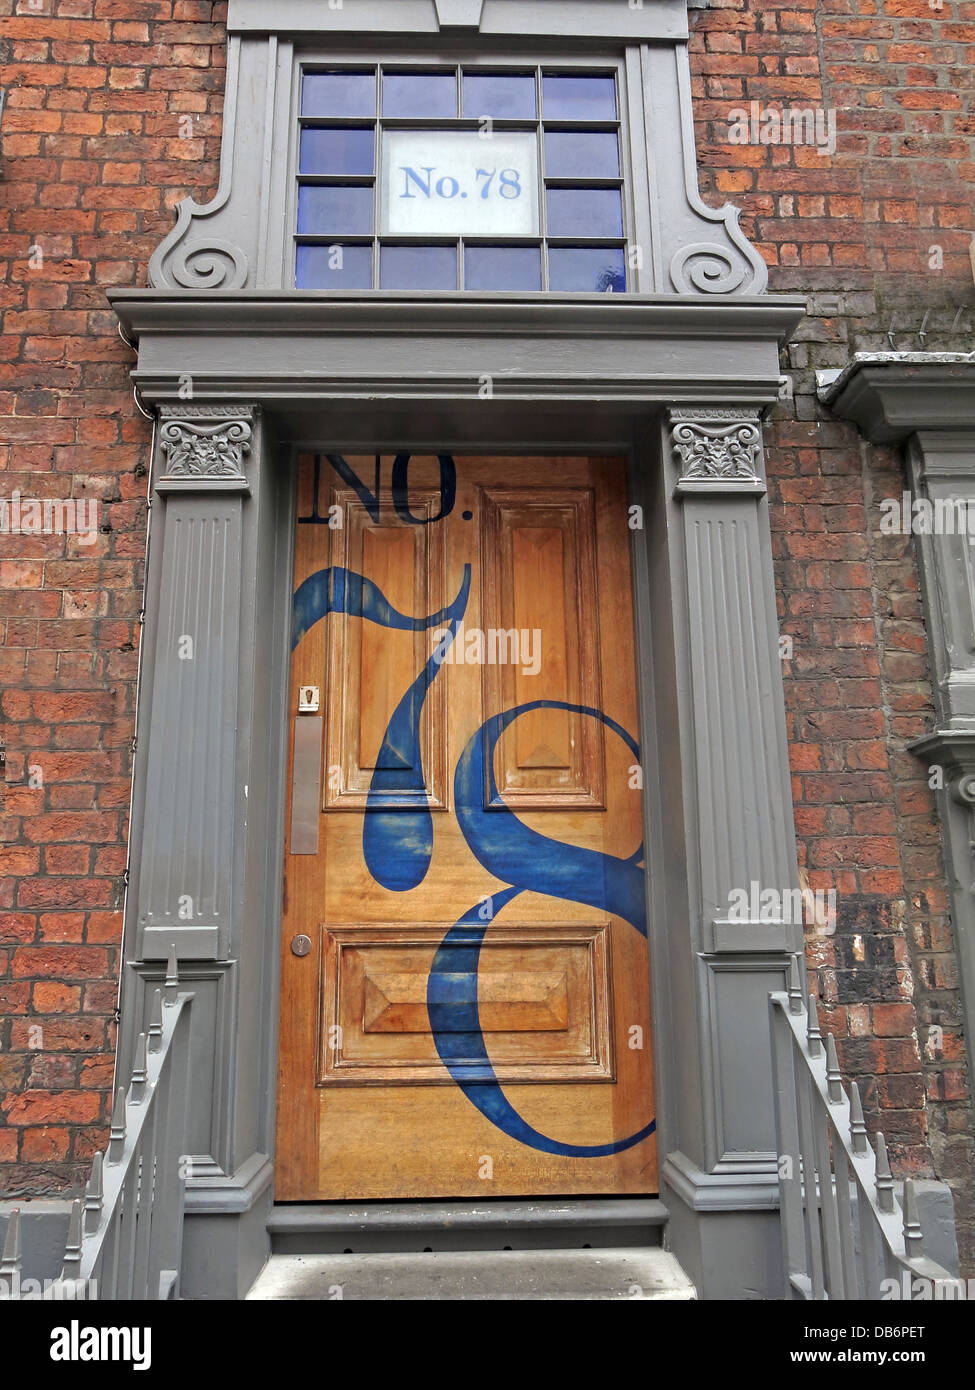 BrooklynMixer SeventyEight, 78, a Doorway in Seel Street, Liverpool, Merseyside, Inghilterra, Regno Unito, L1 4BH Foto Stock